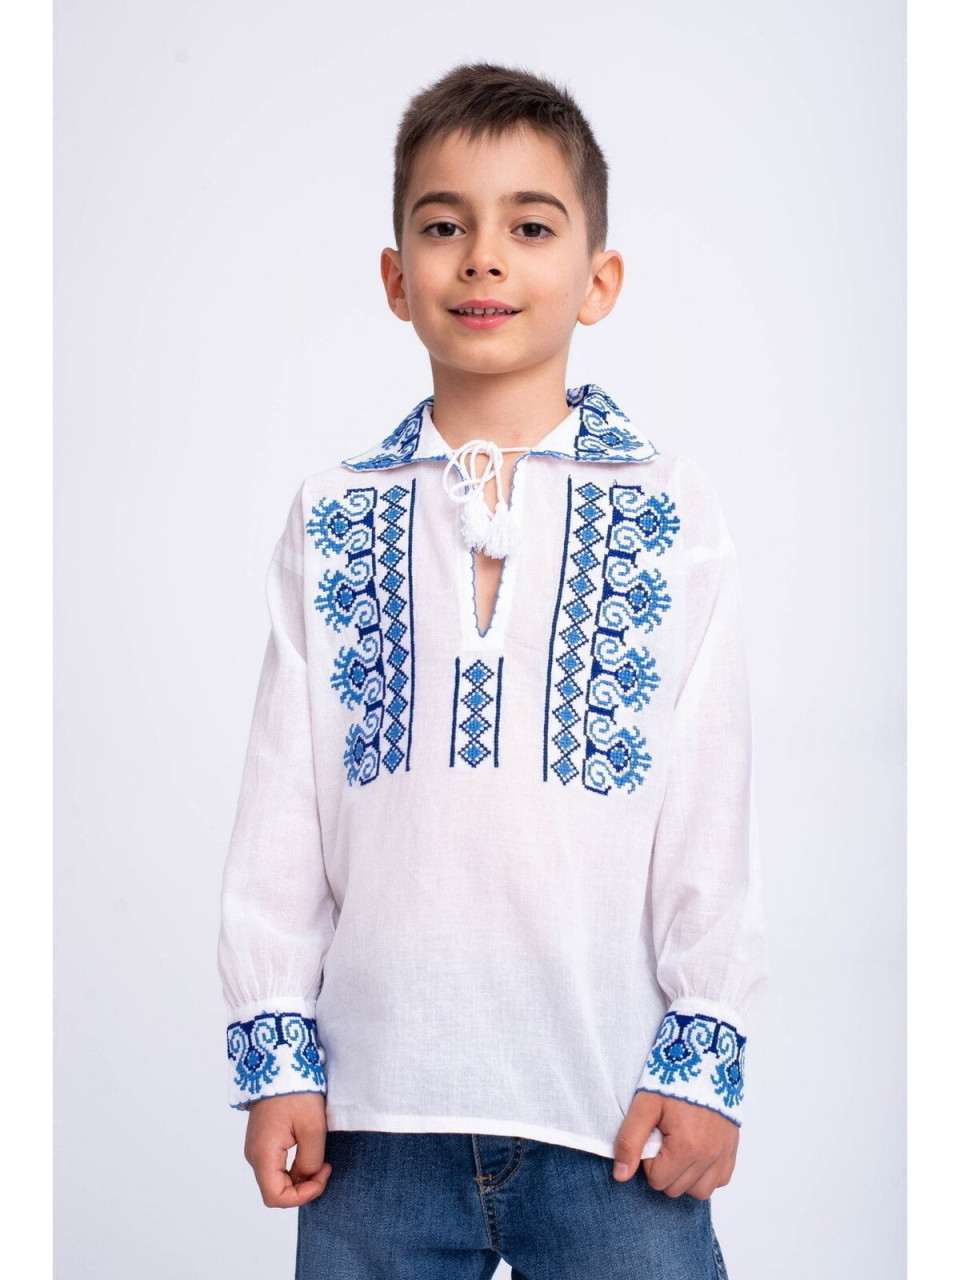 Bluza traditionala din bumbac alb cu broderie albastra in forma de romb pentru baieti